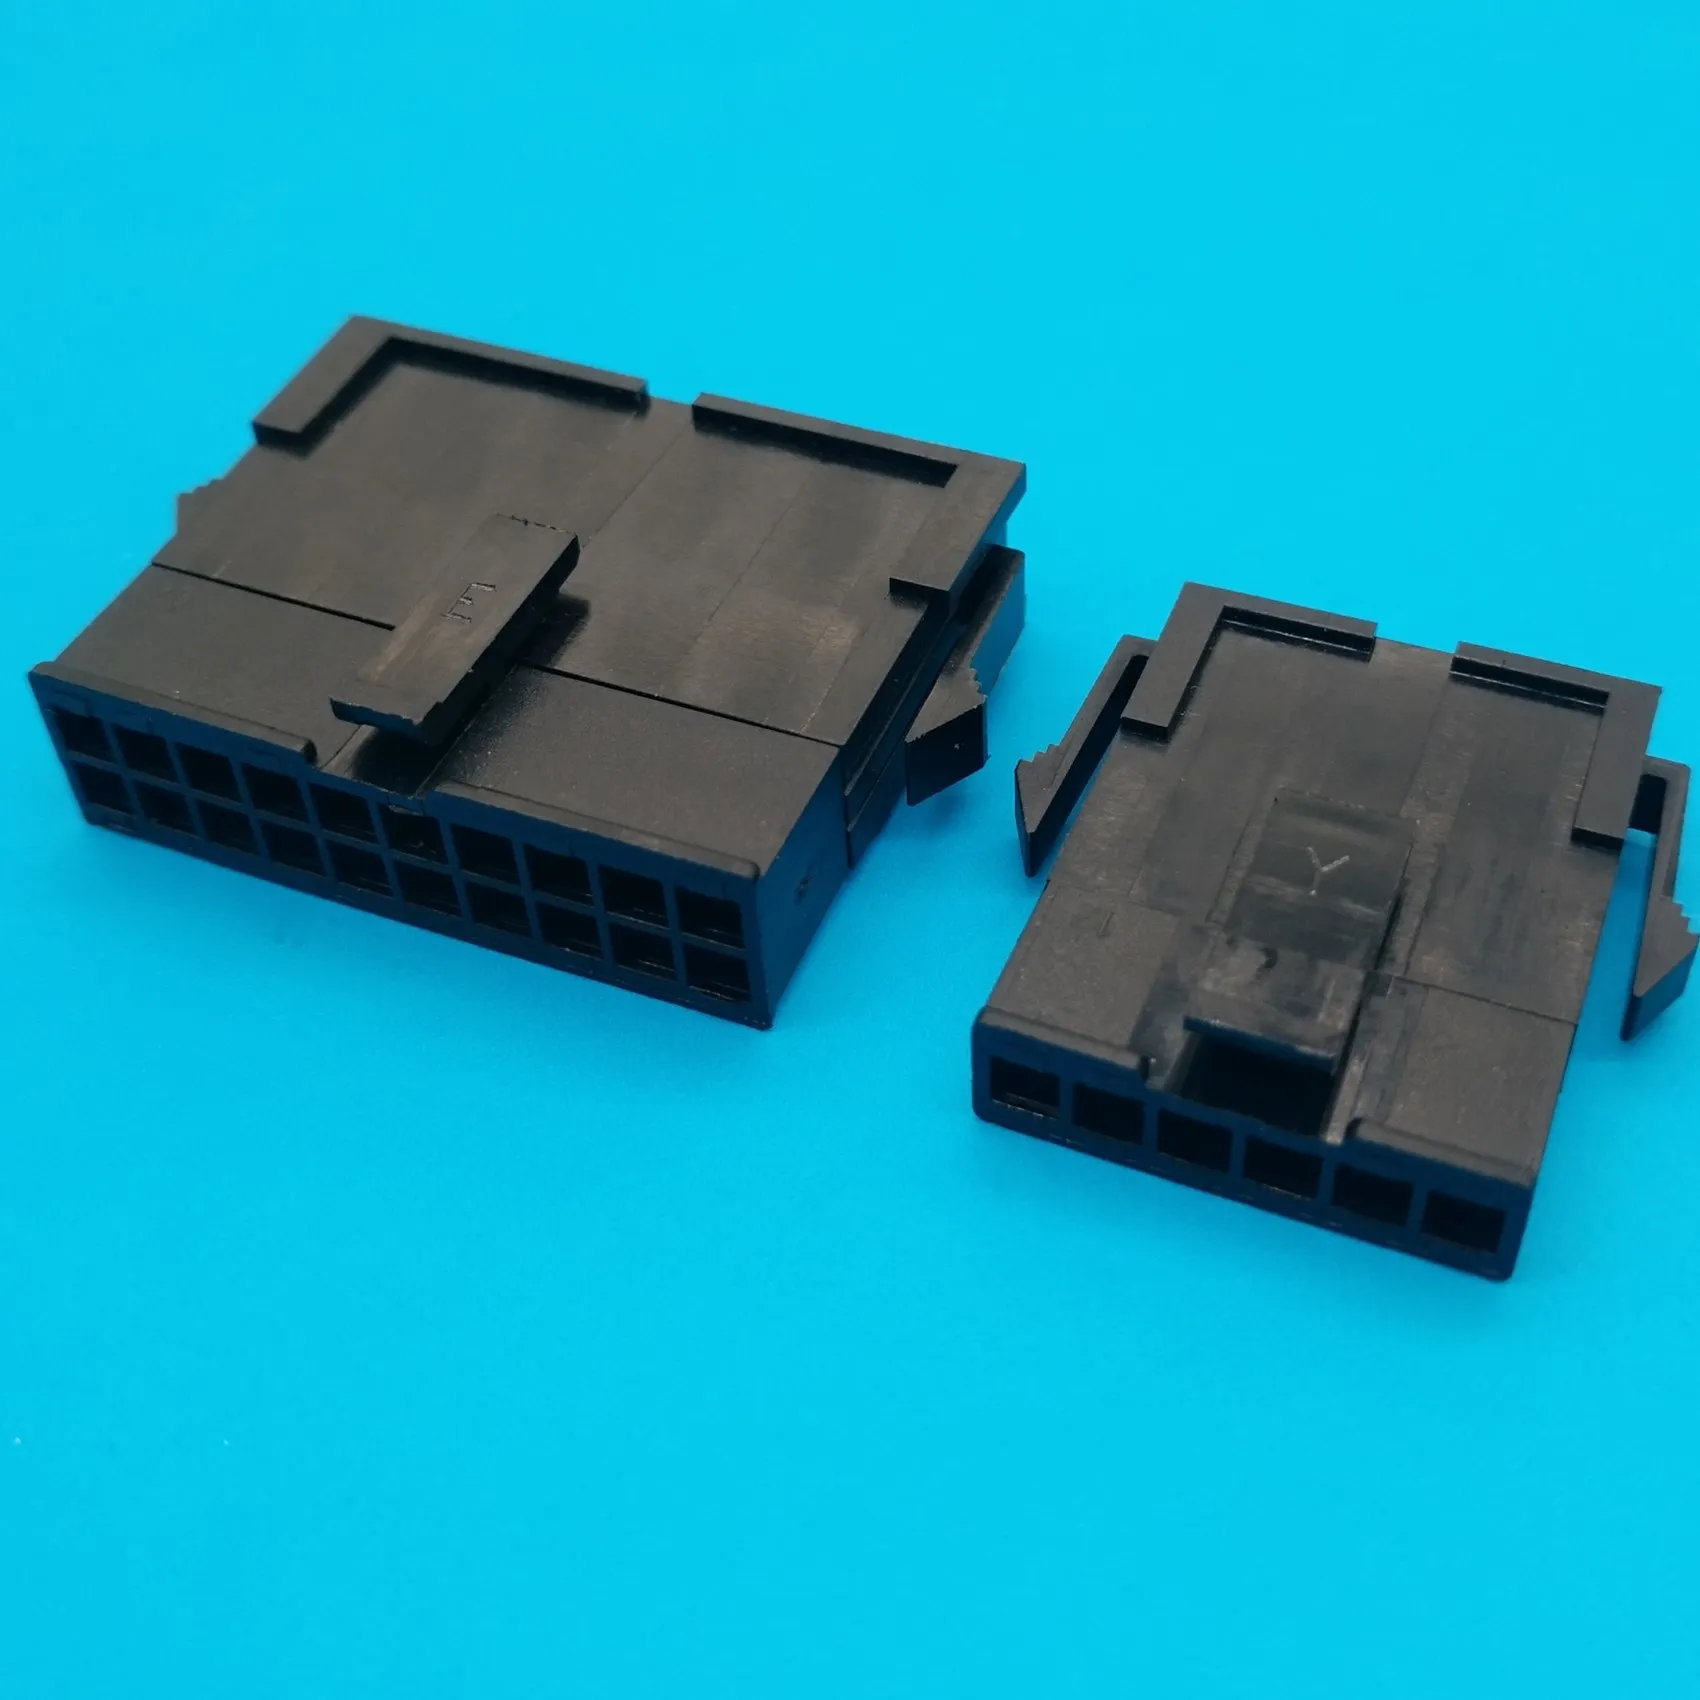 3.0 mm molex connector